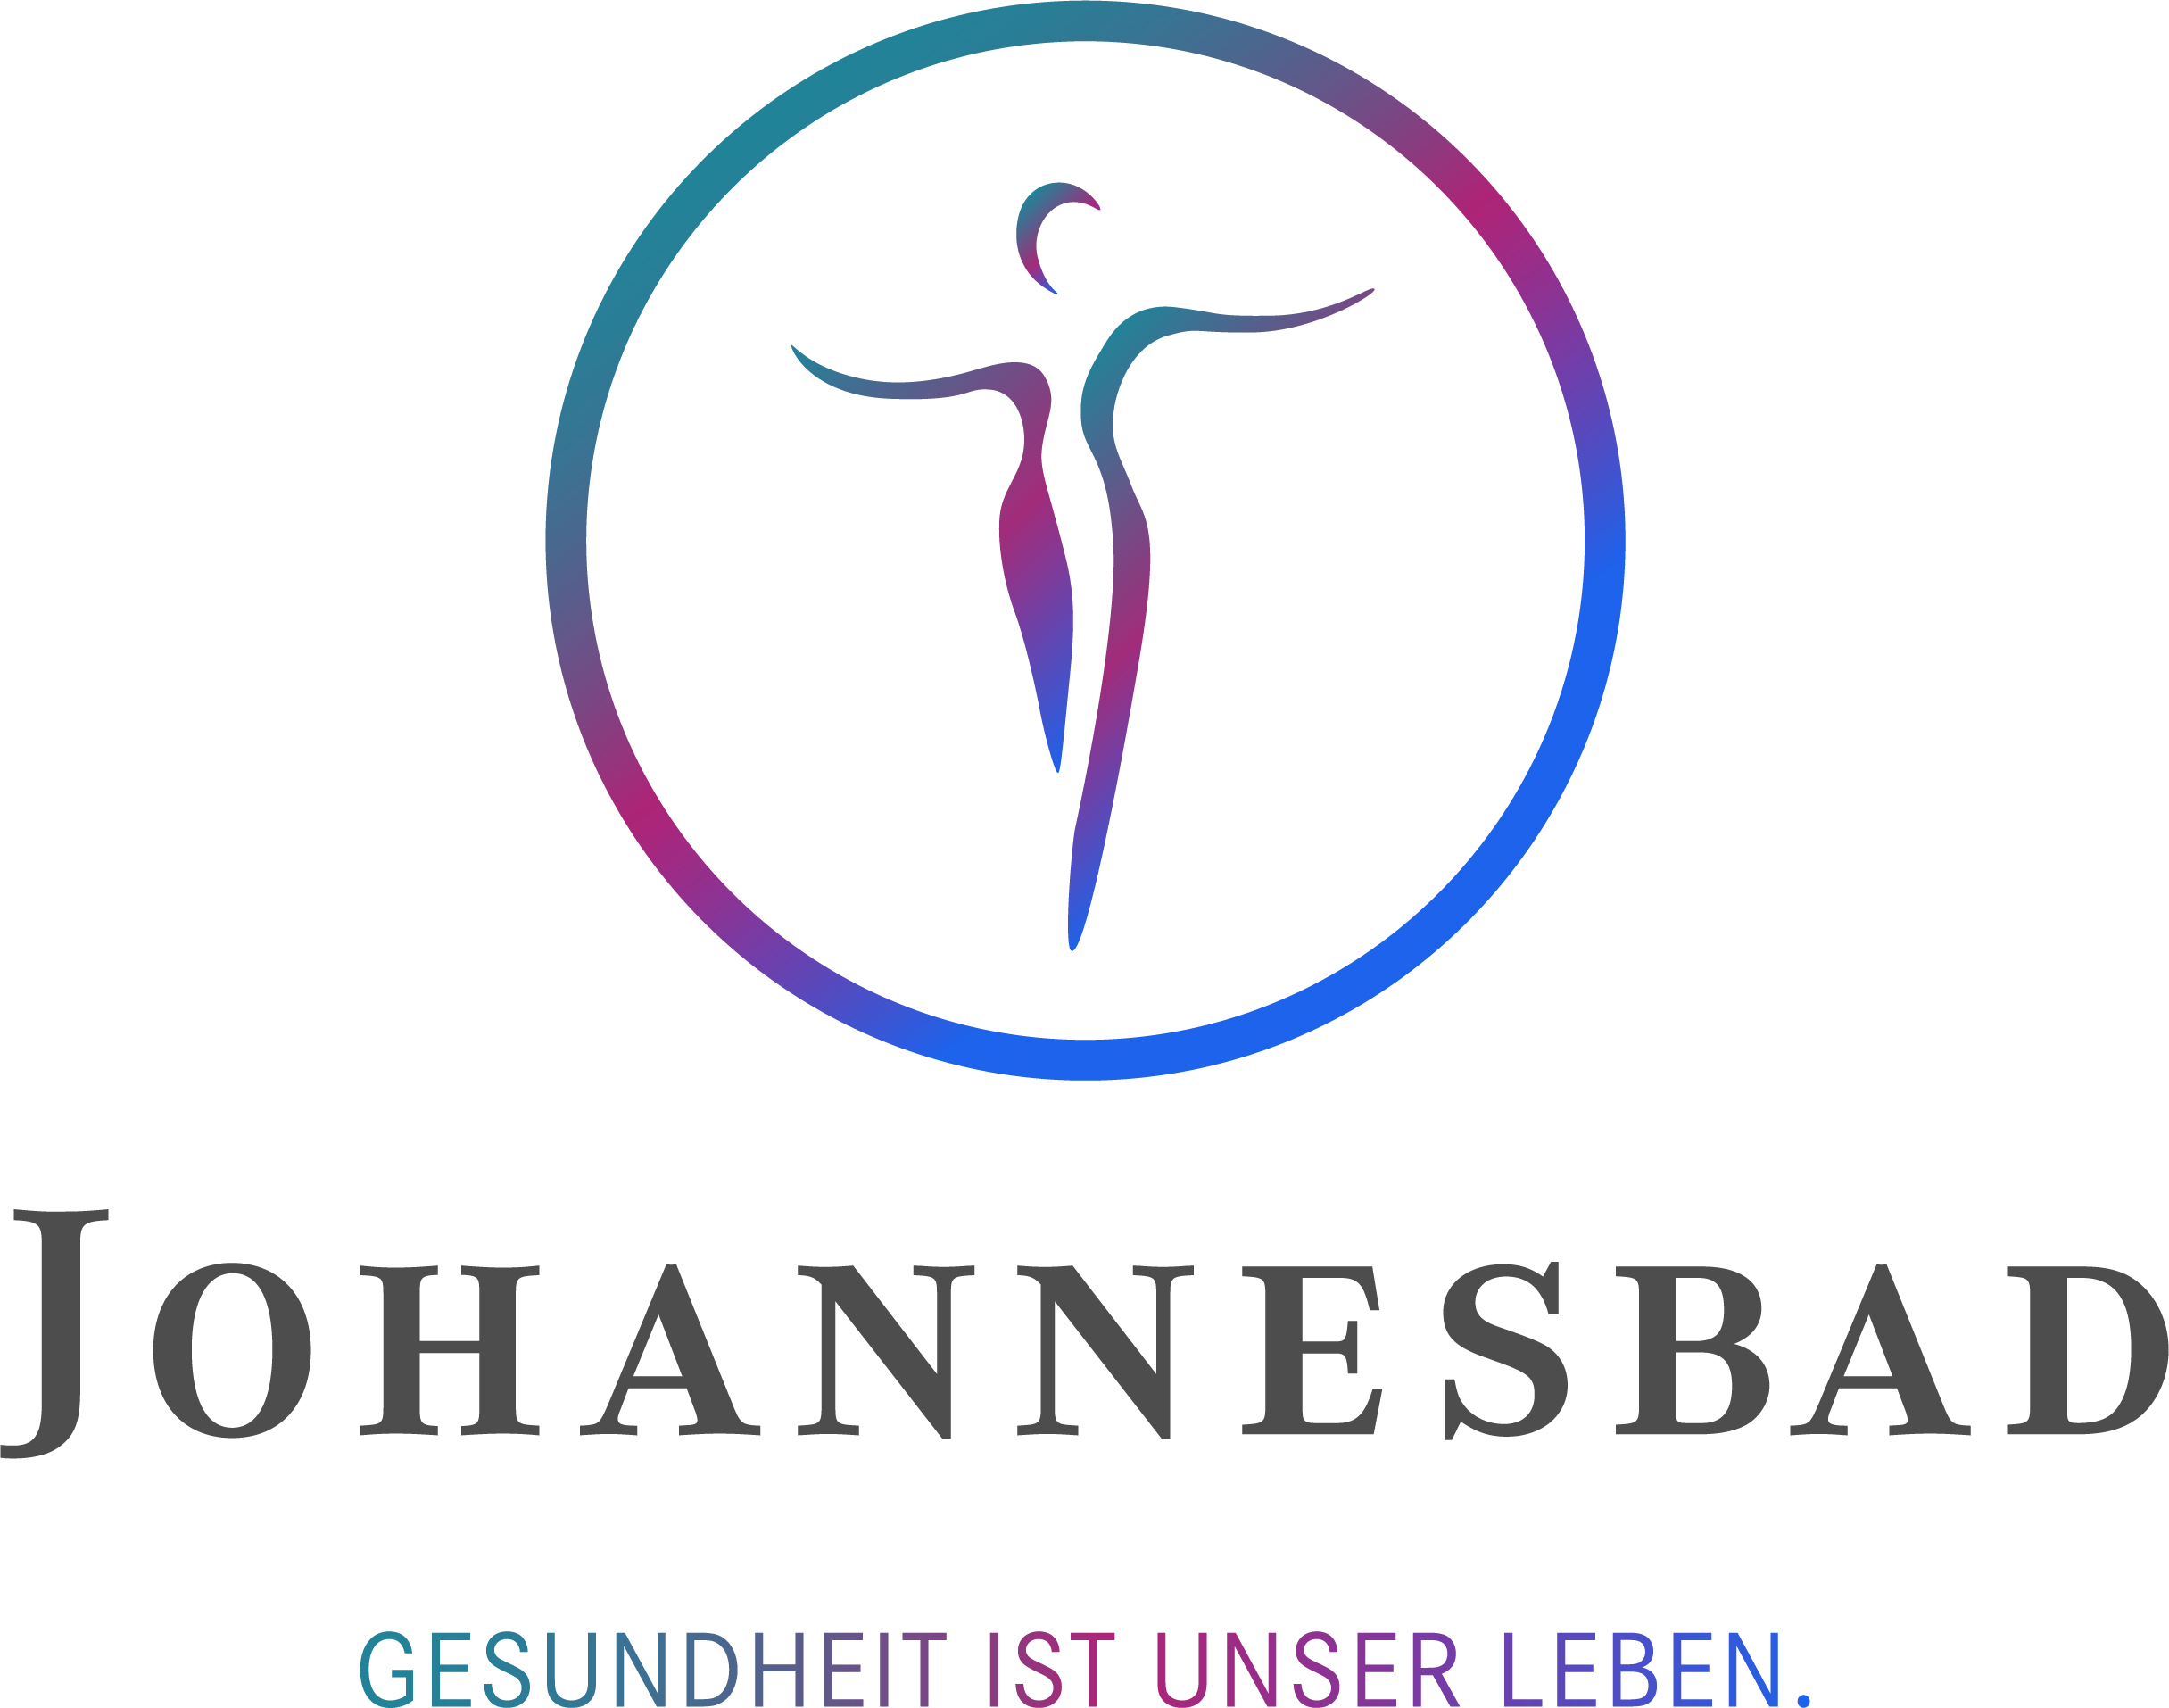 Johannesbad logo